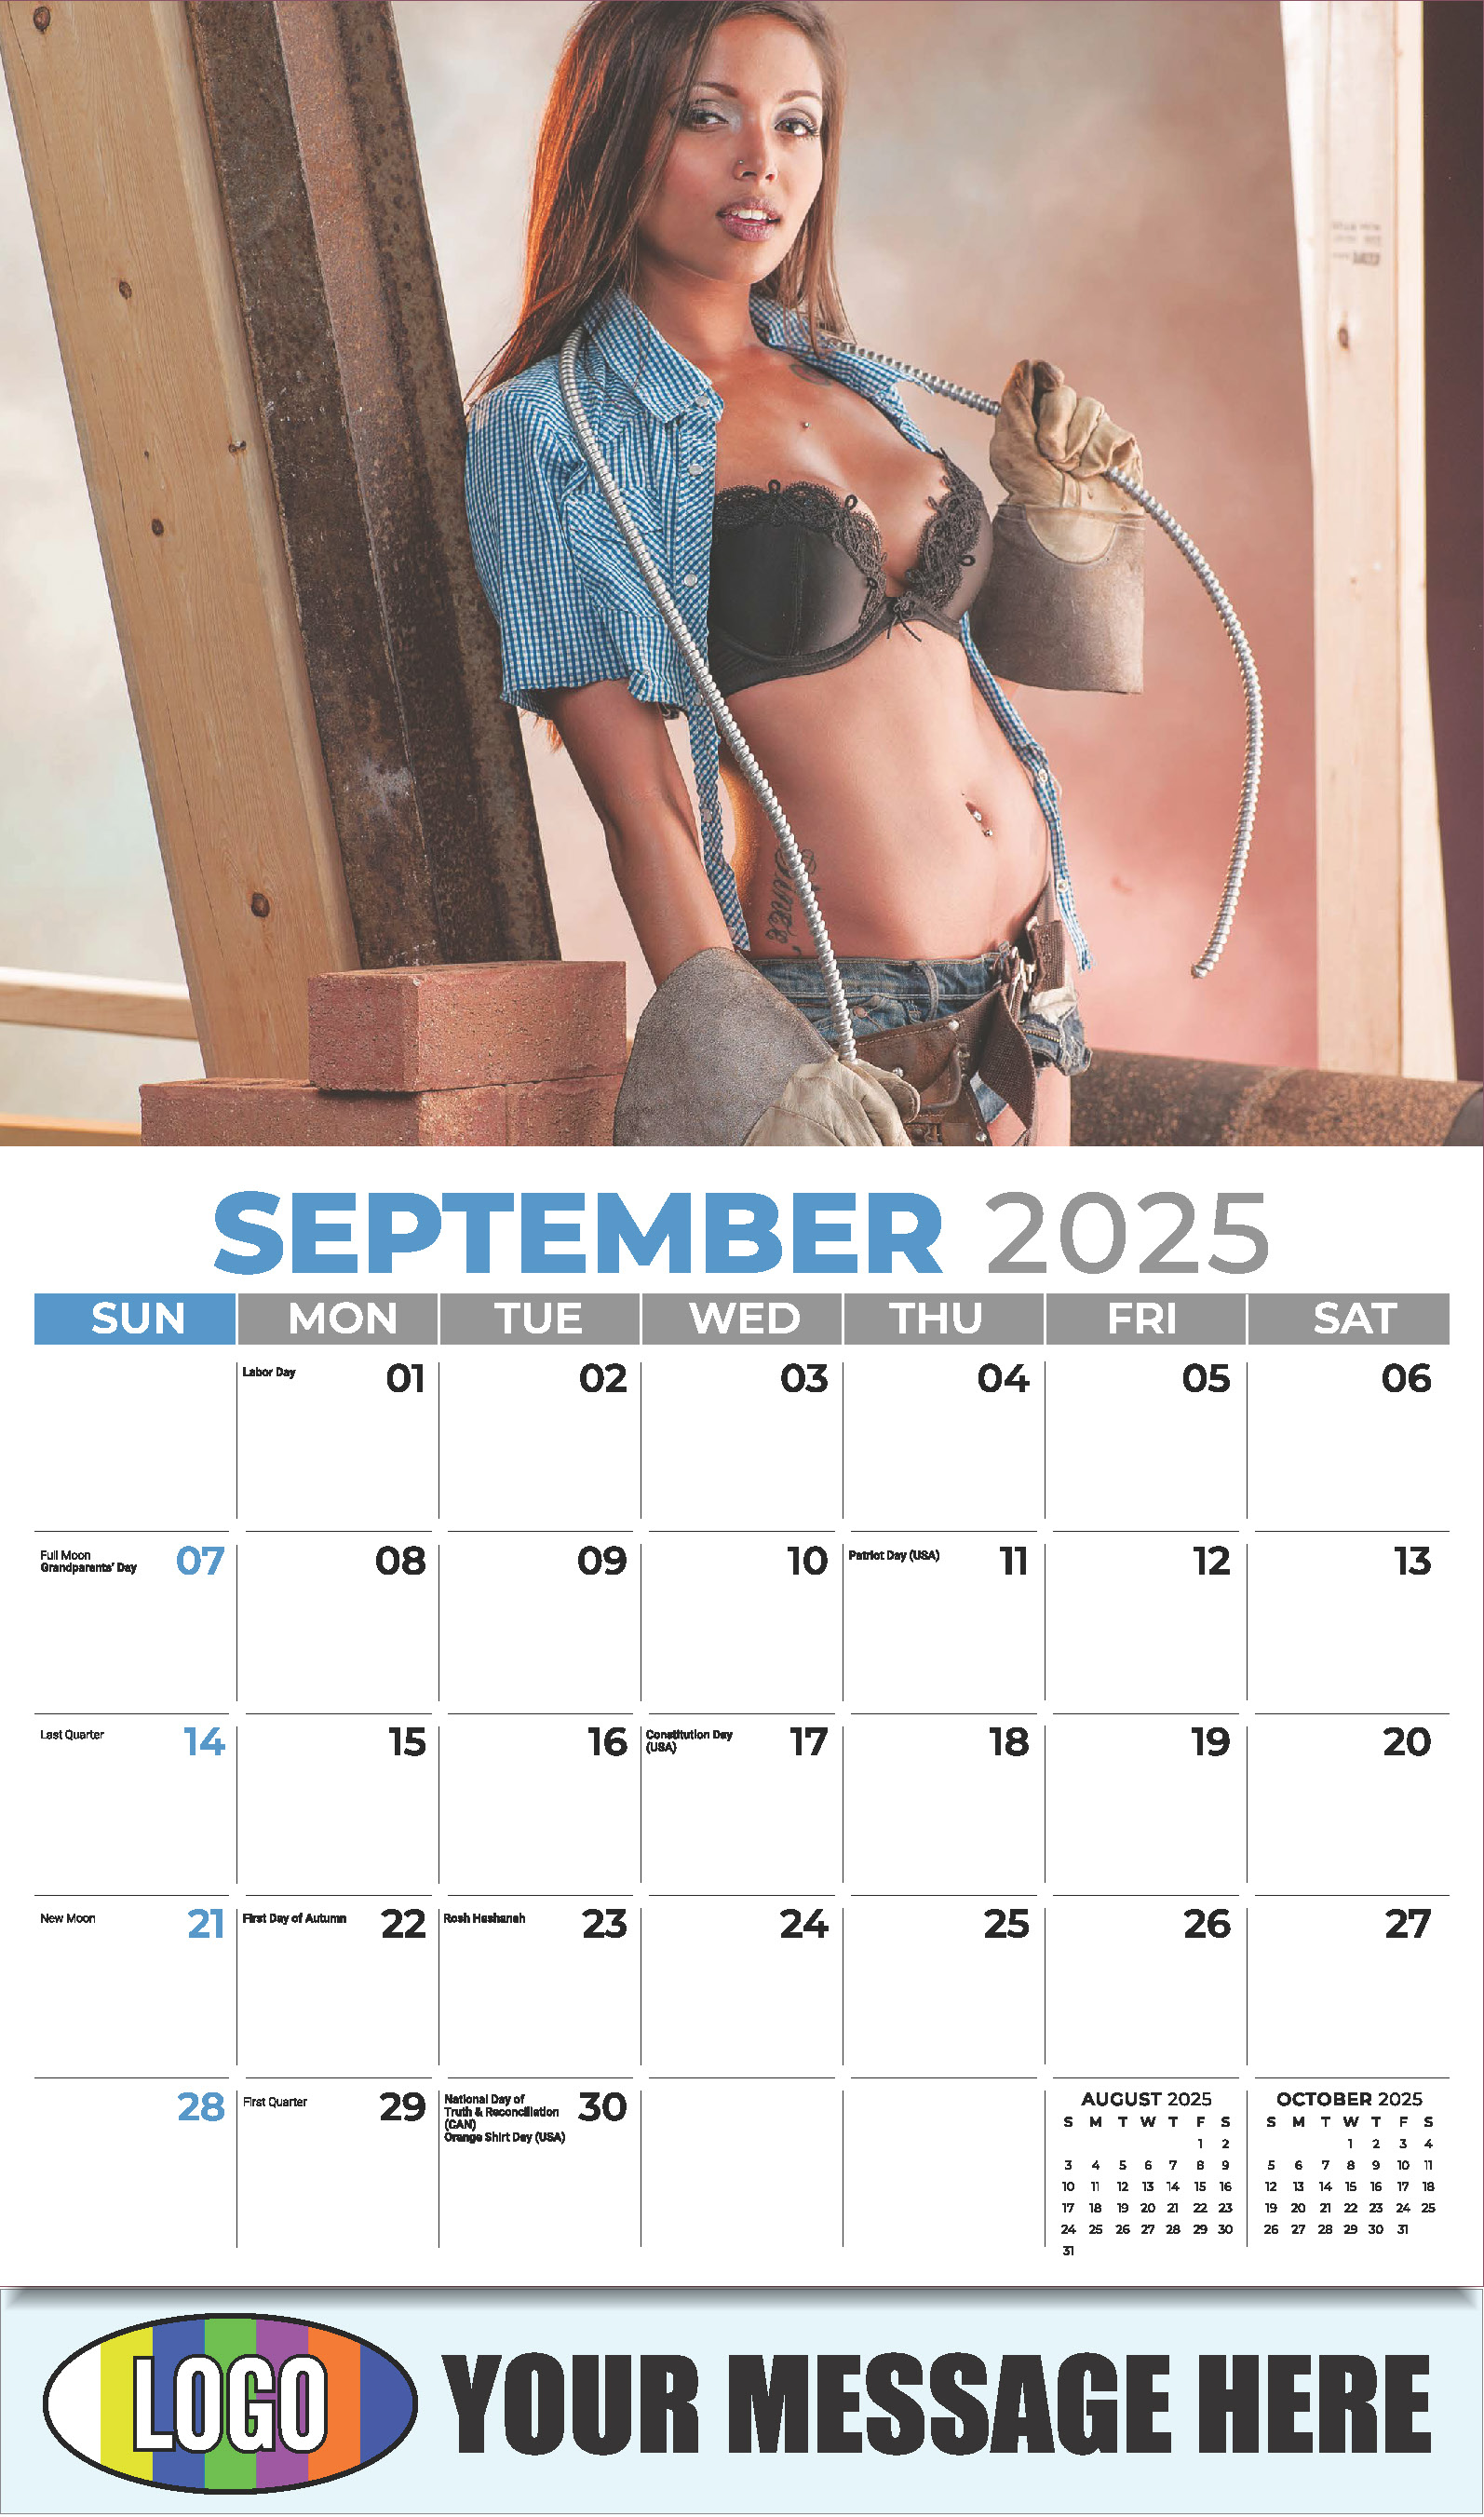 Building Bades 2025 Business Promotional Calendar - September